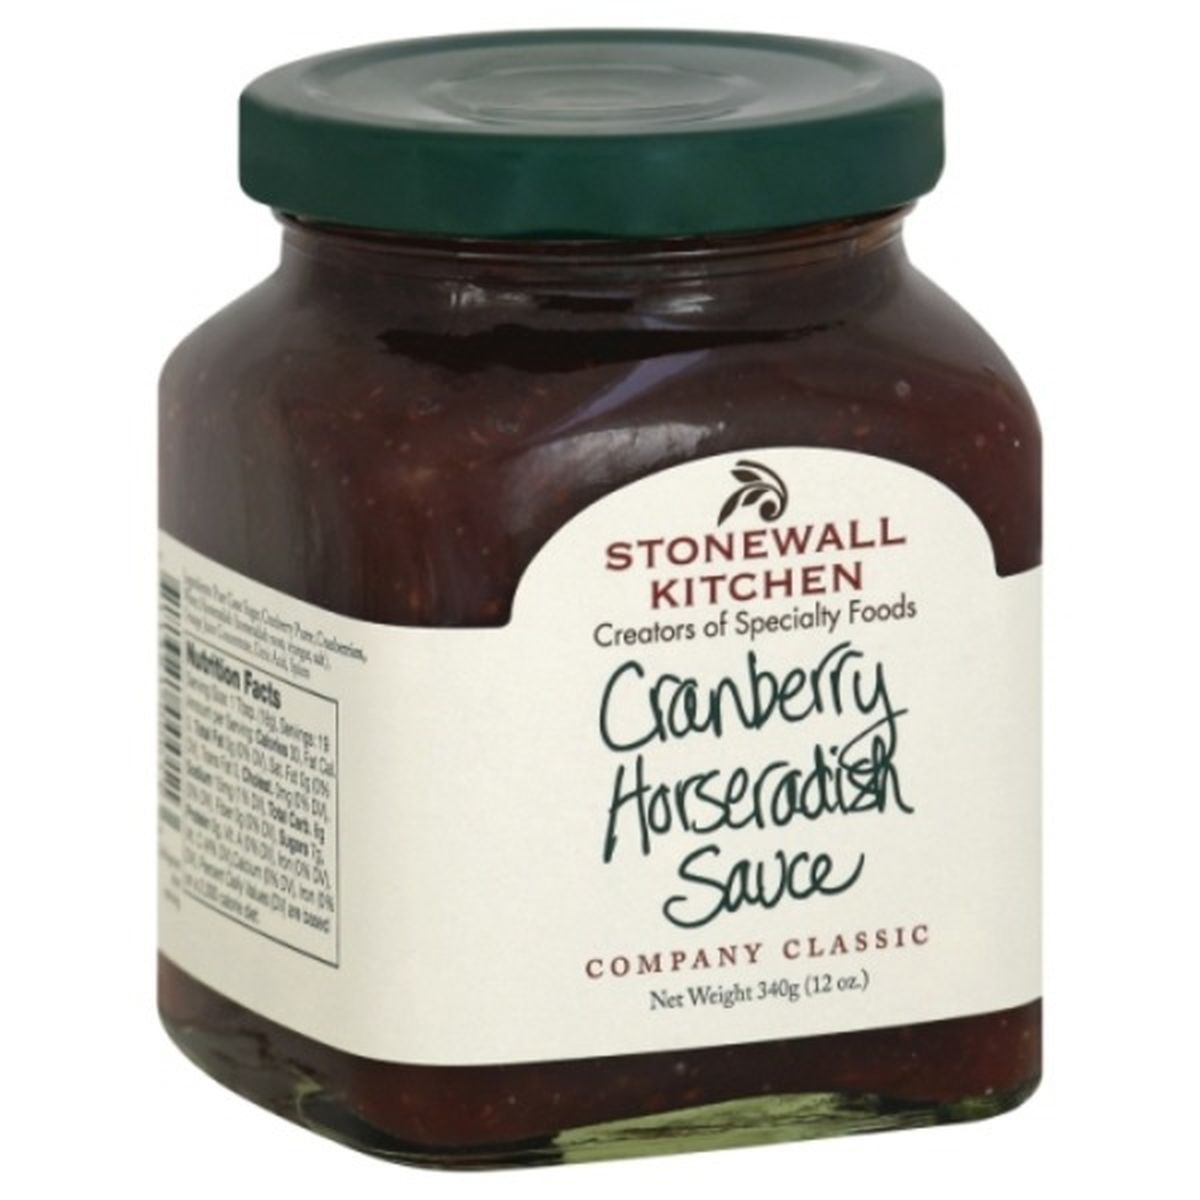 Calories in Stonewall Kitchen Horseradish Sauce, Cranberry